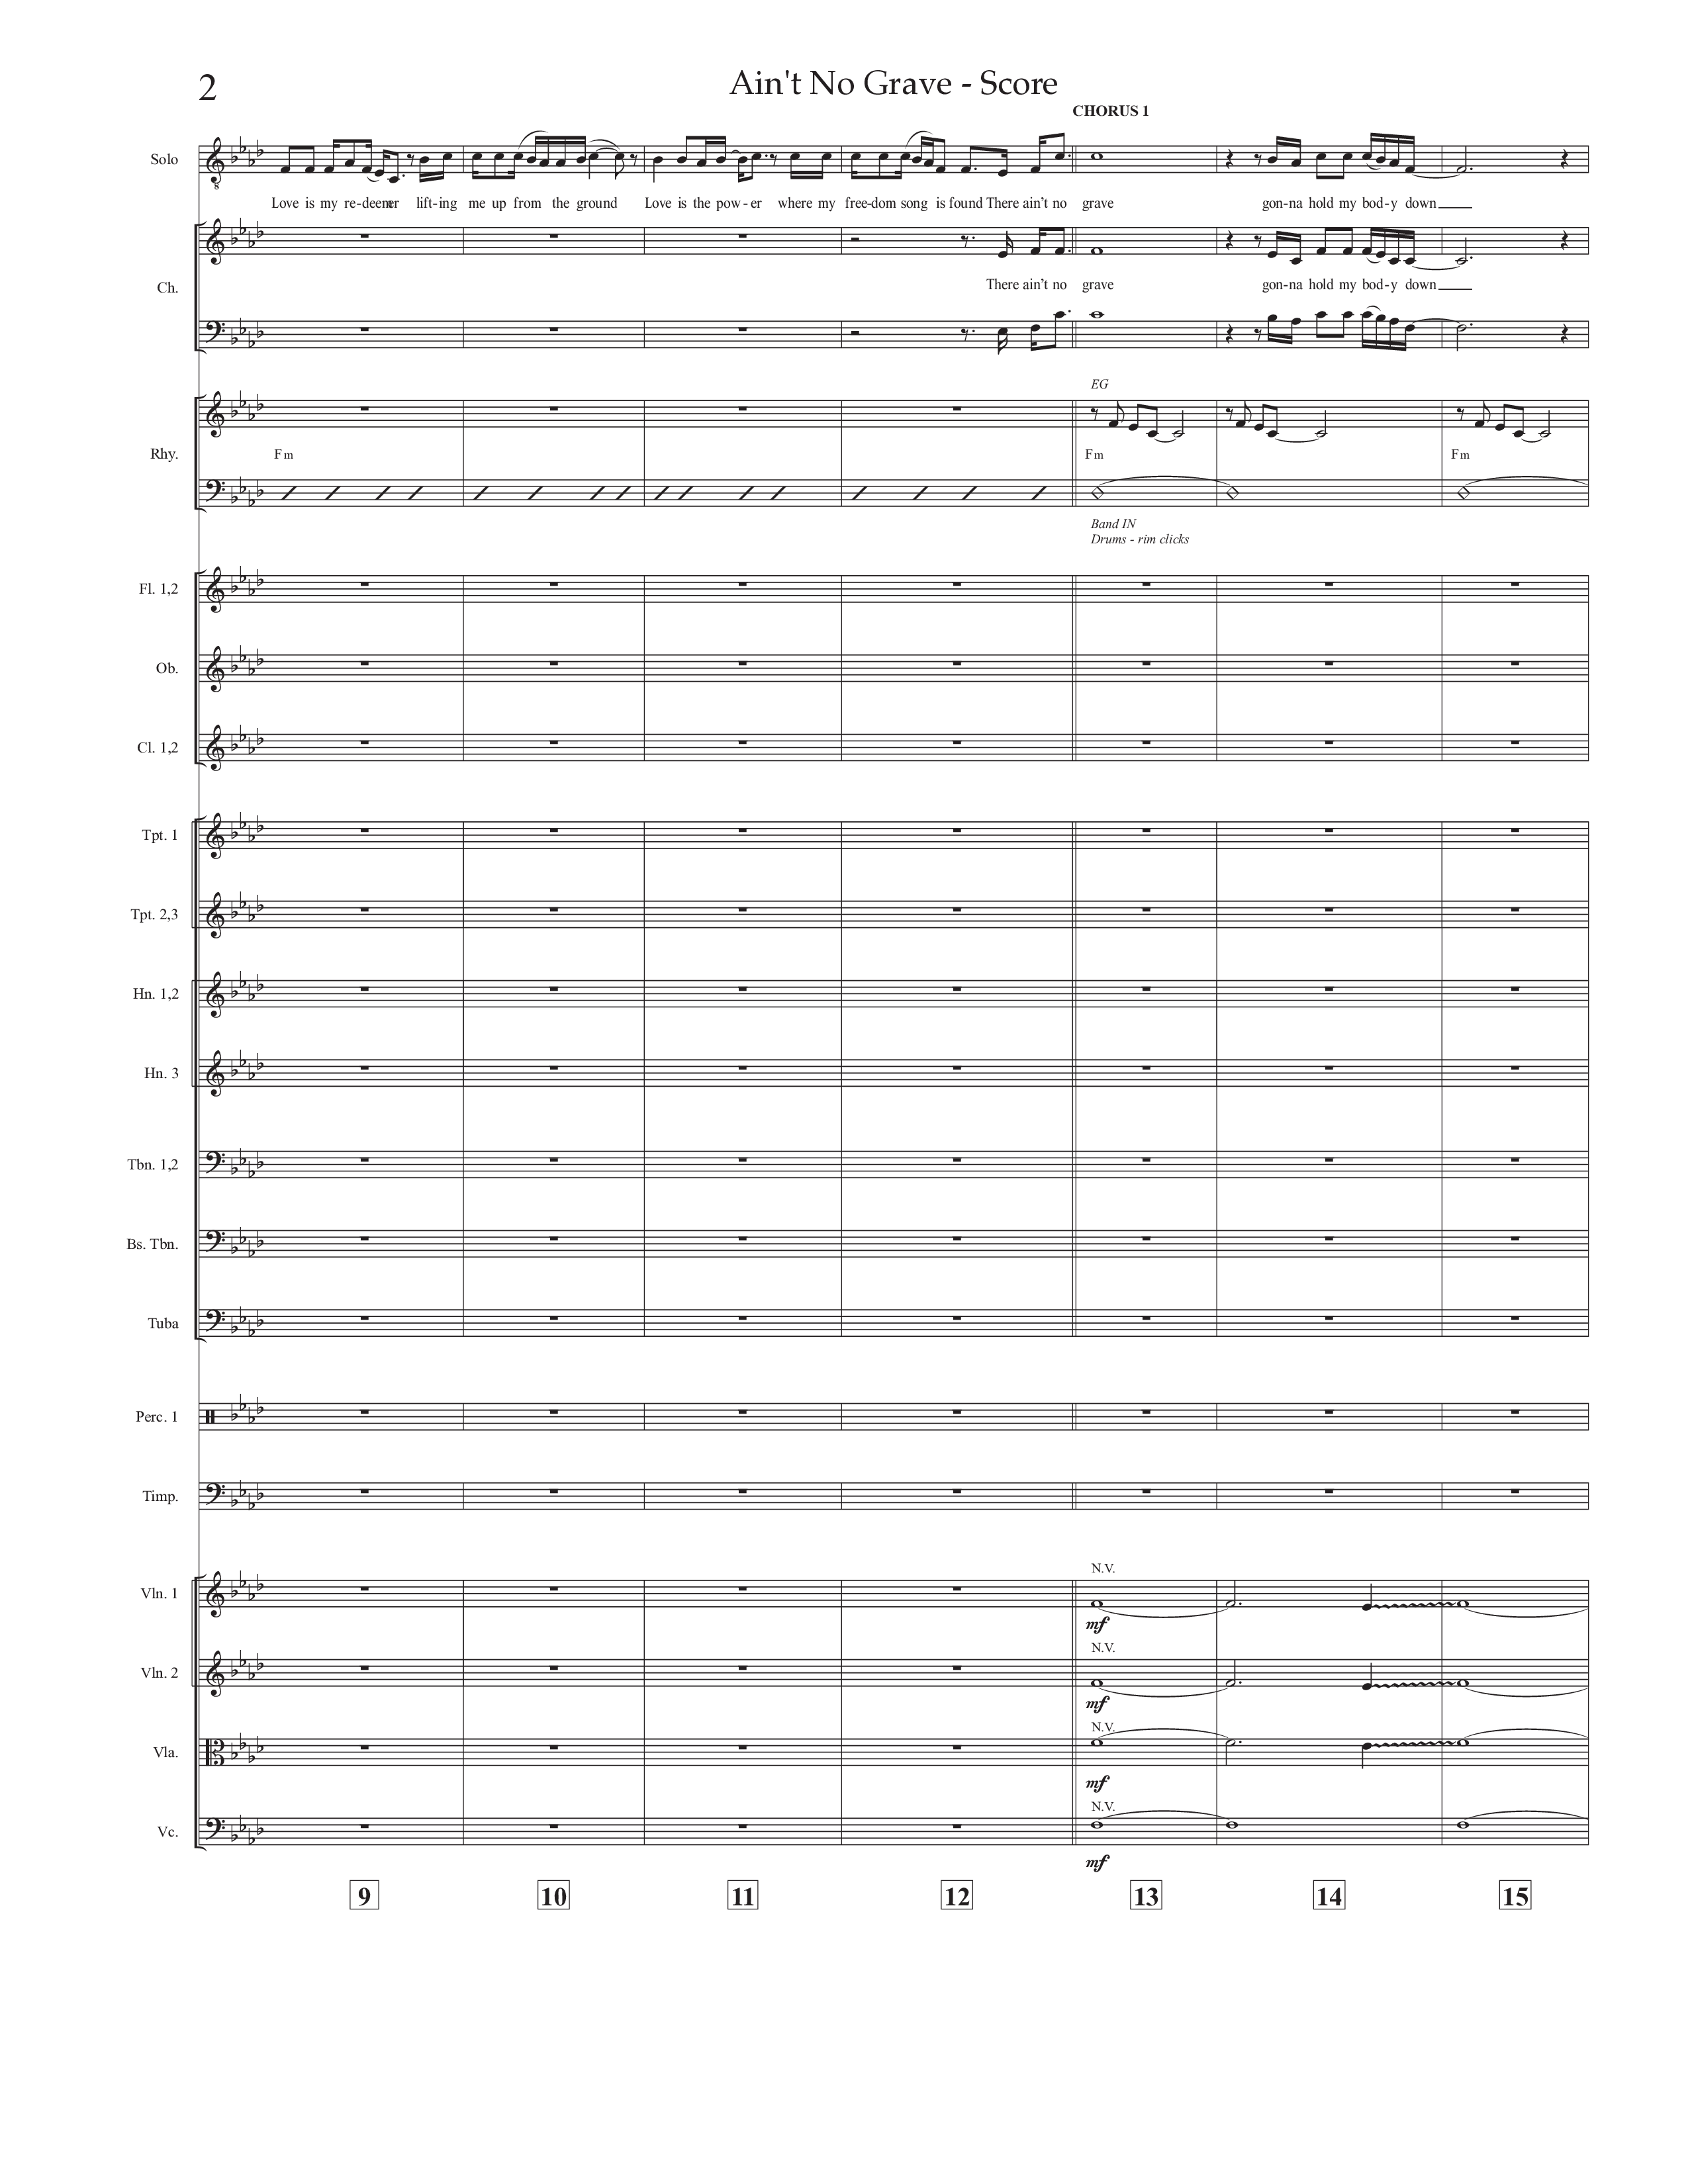 Ain't No Grave (Choral Anthem SATB) Orchestration (Prestonwood Choir / Prestonwood Worship / Arr. Jonathan Walker)